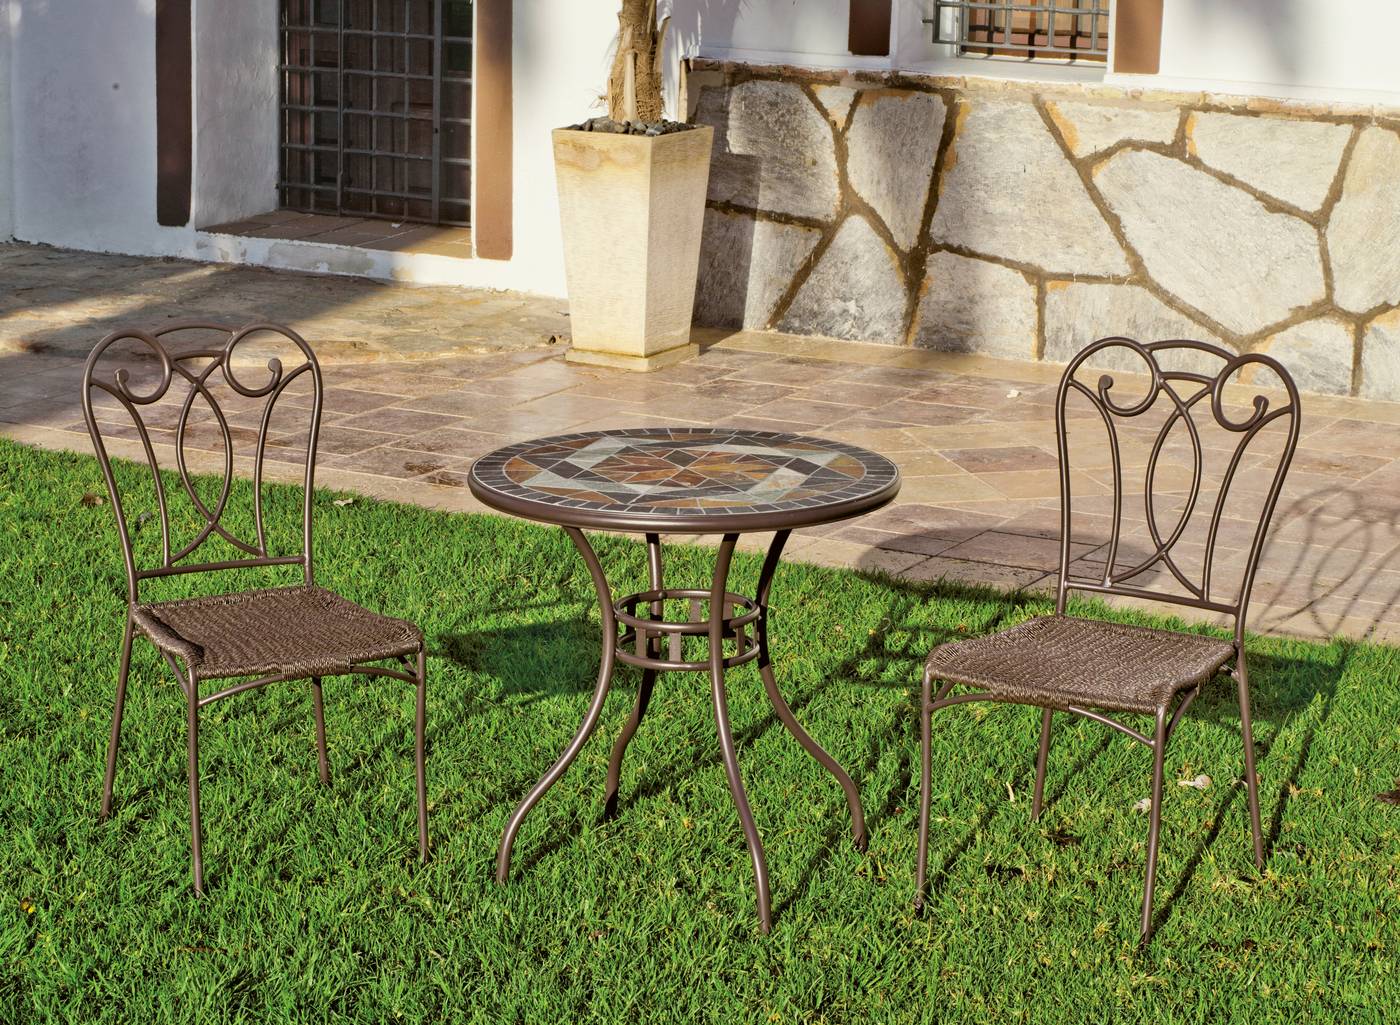 Conjunto de forja de lujo: mesa con tablero mosaico de piedra + 2 sillas de forja apilables